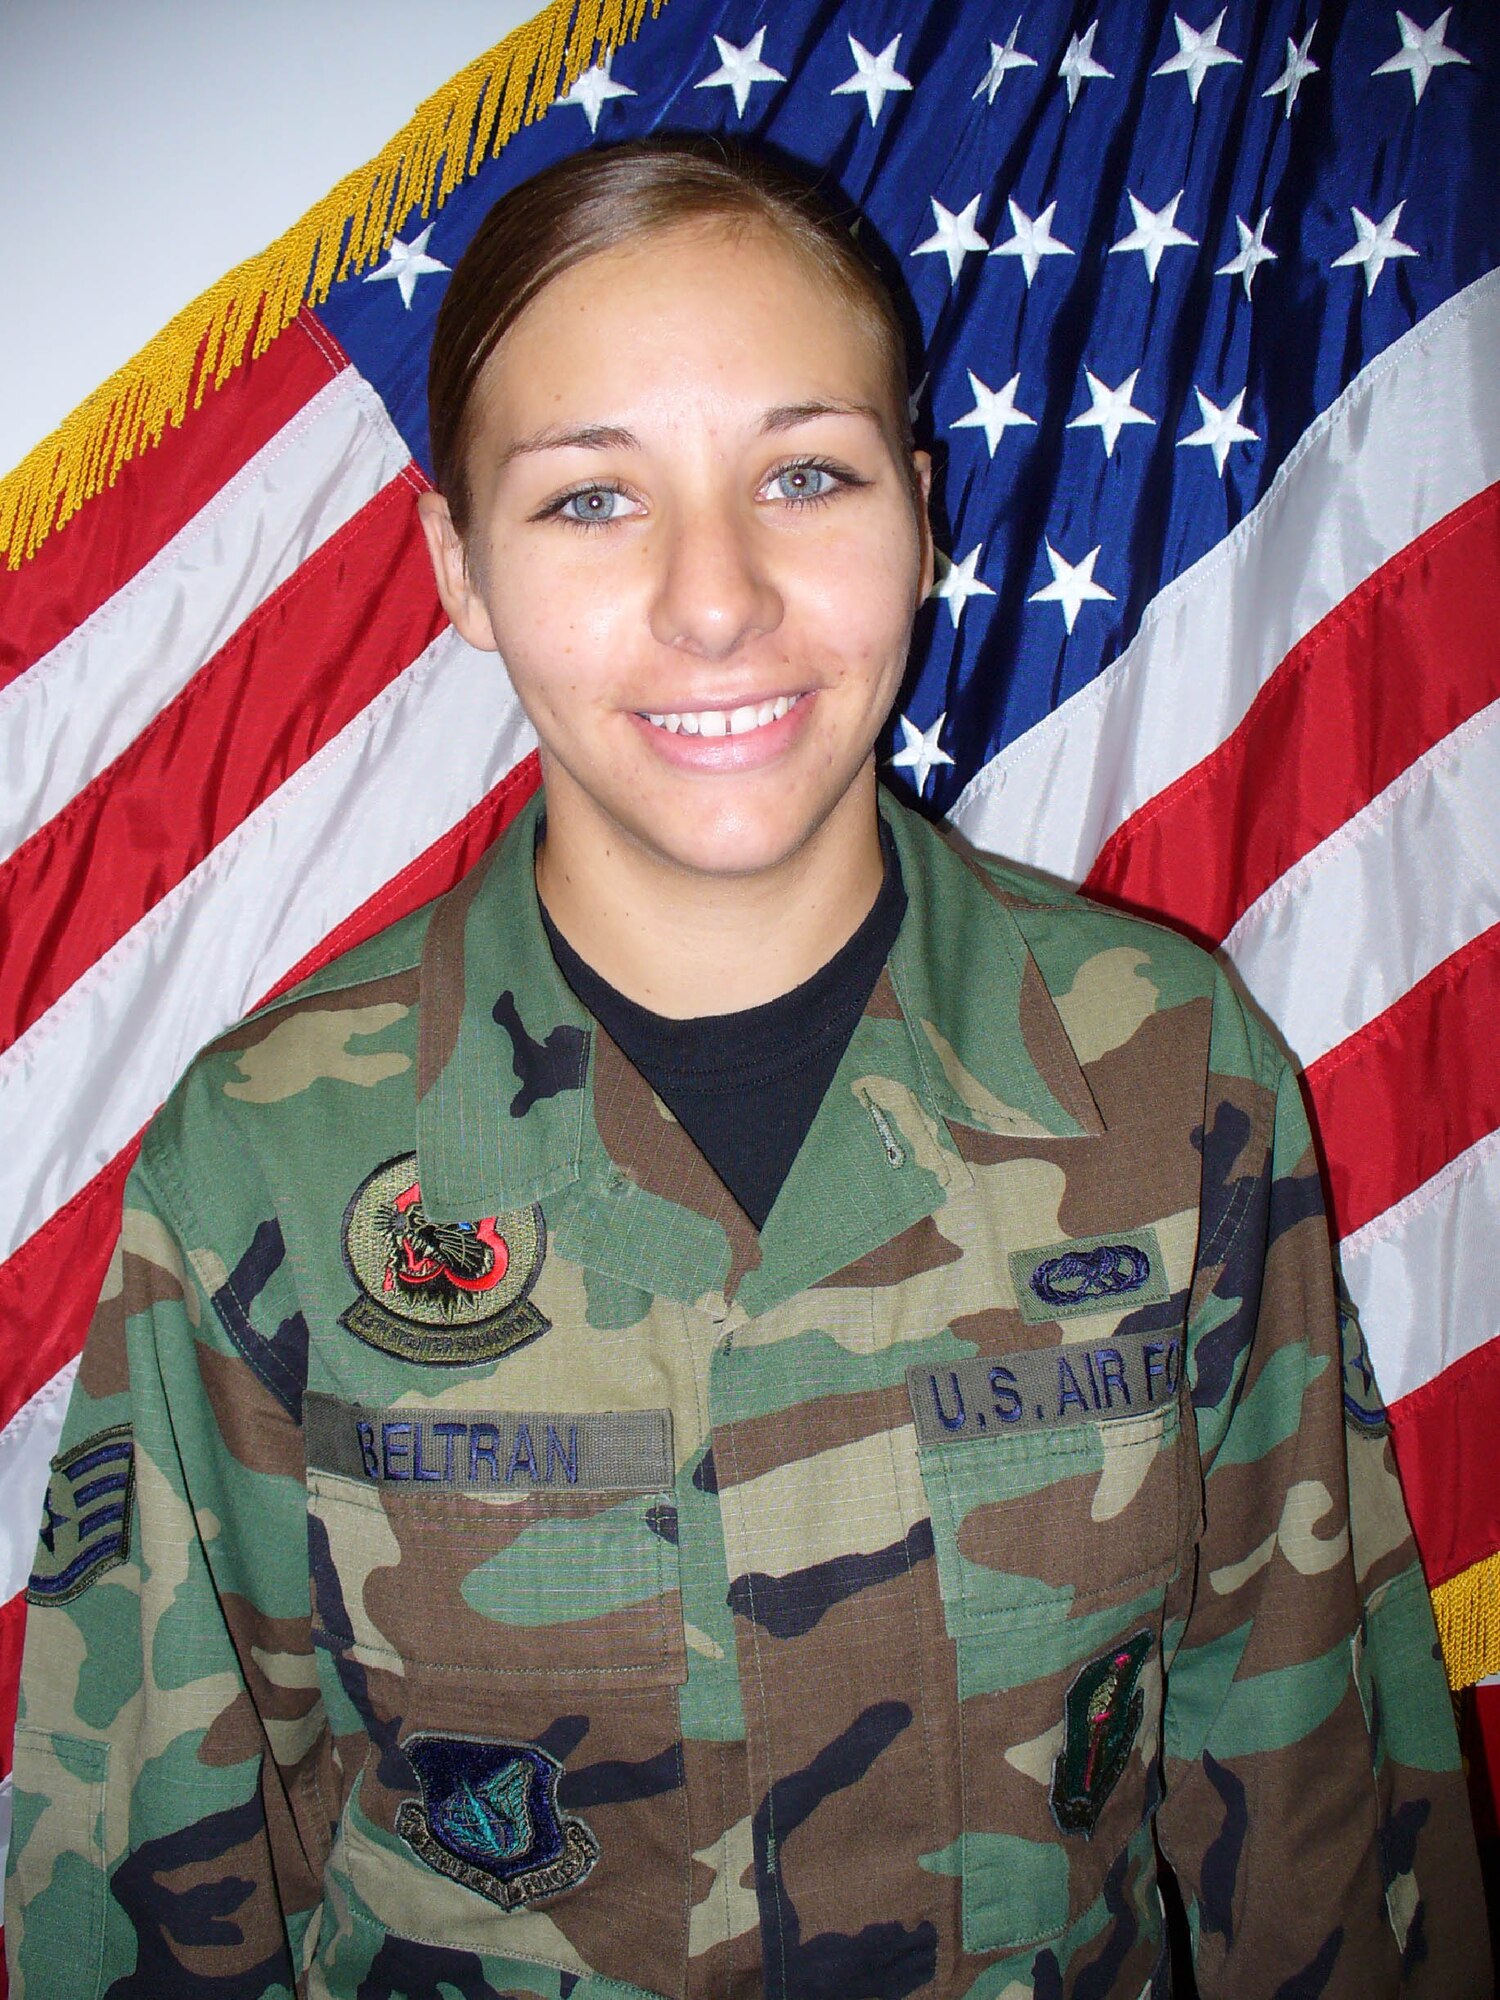 Staff Sgt. Amber Beltran